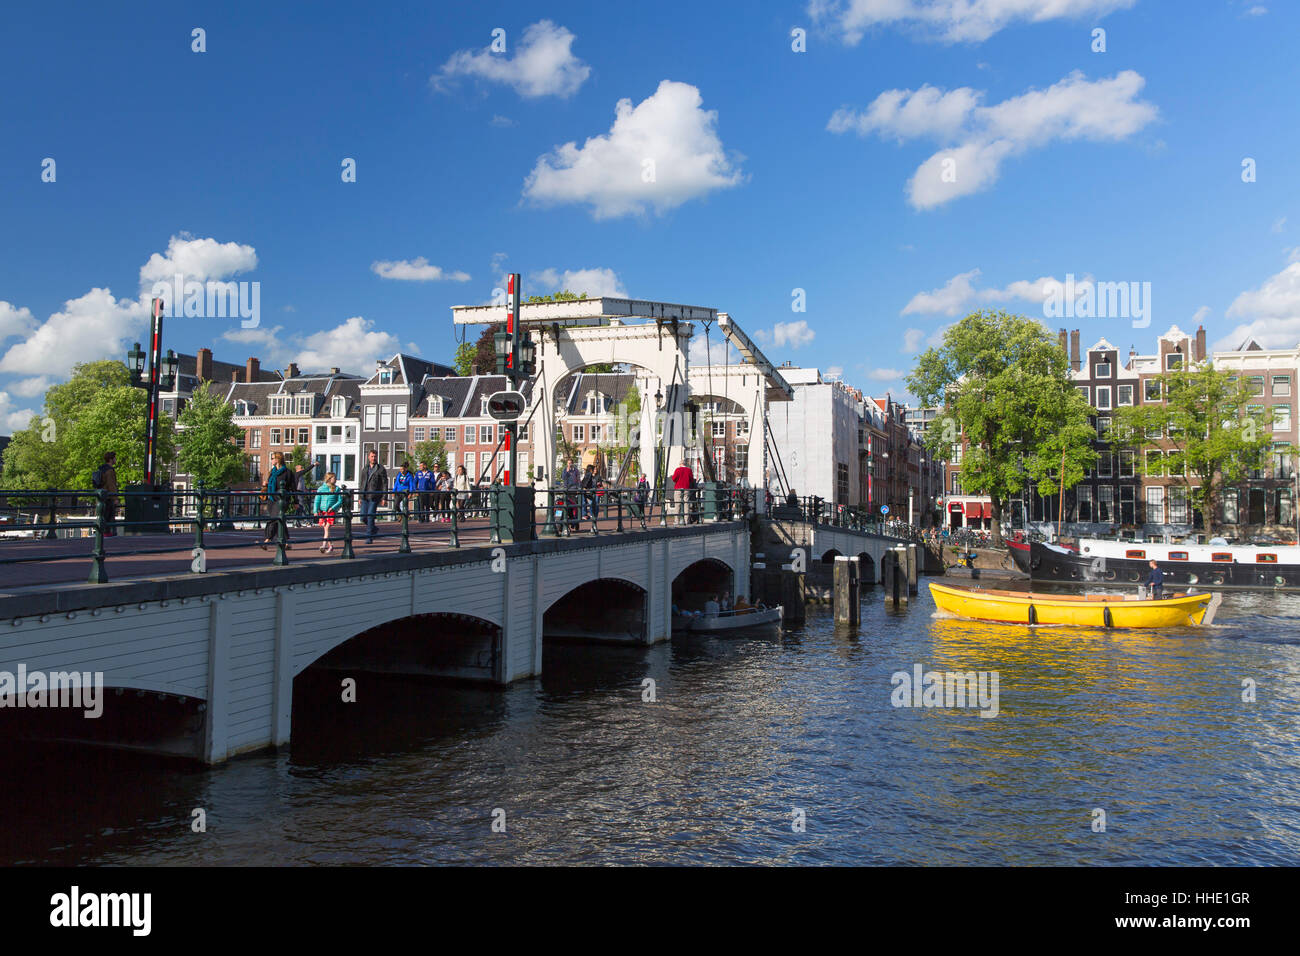 Magere Brug (pont Maigre) sur l'Amstel, Amsterdam, Pays-Bas Banque D'Images